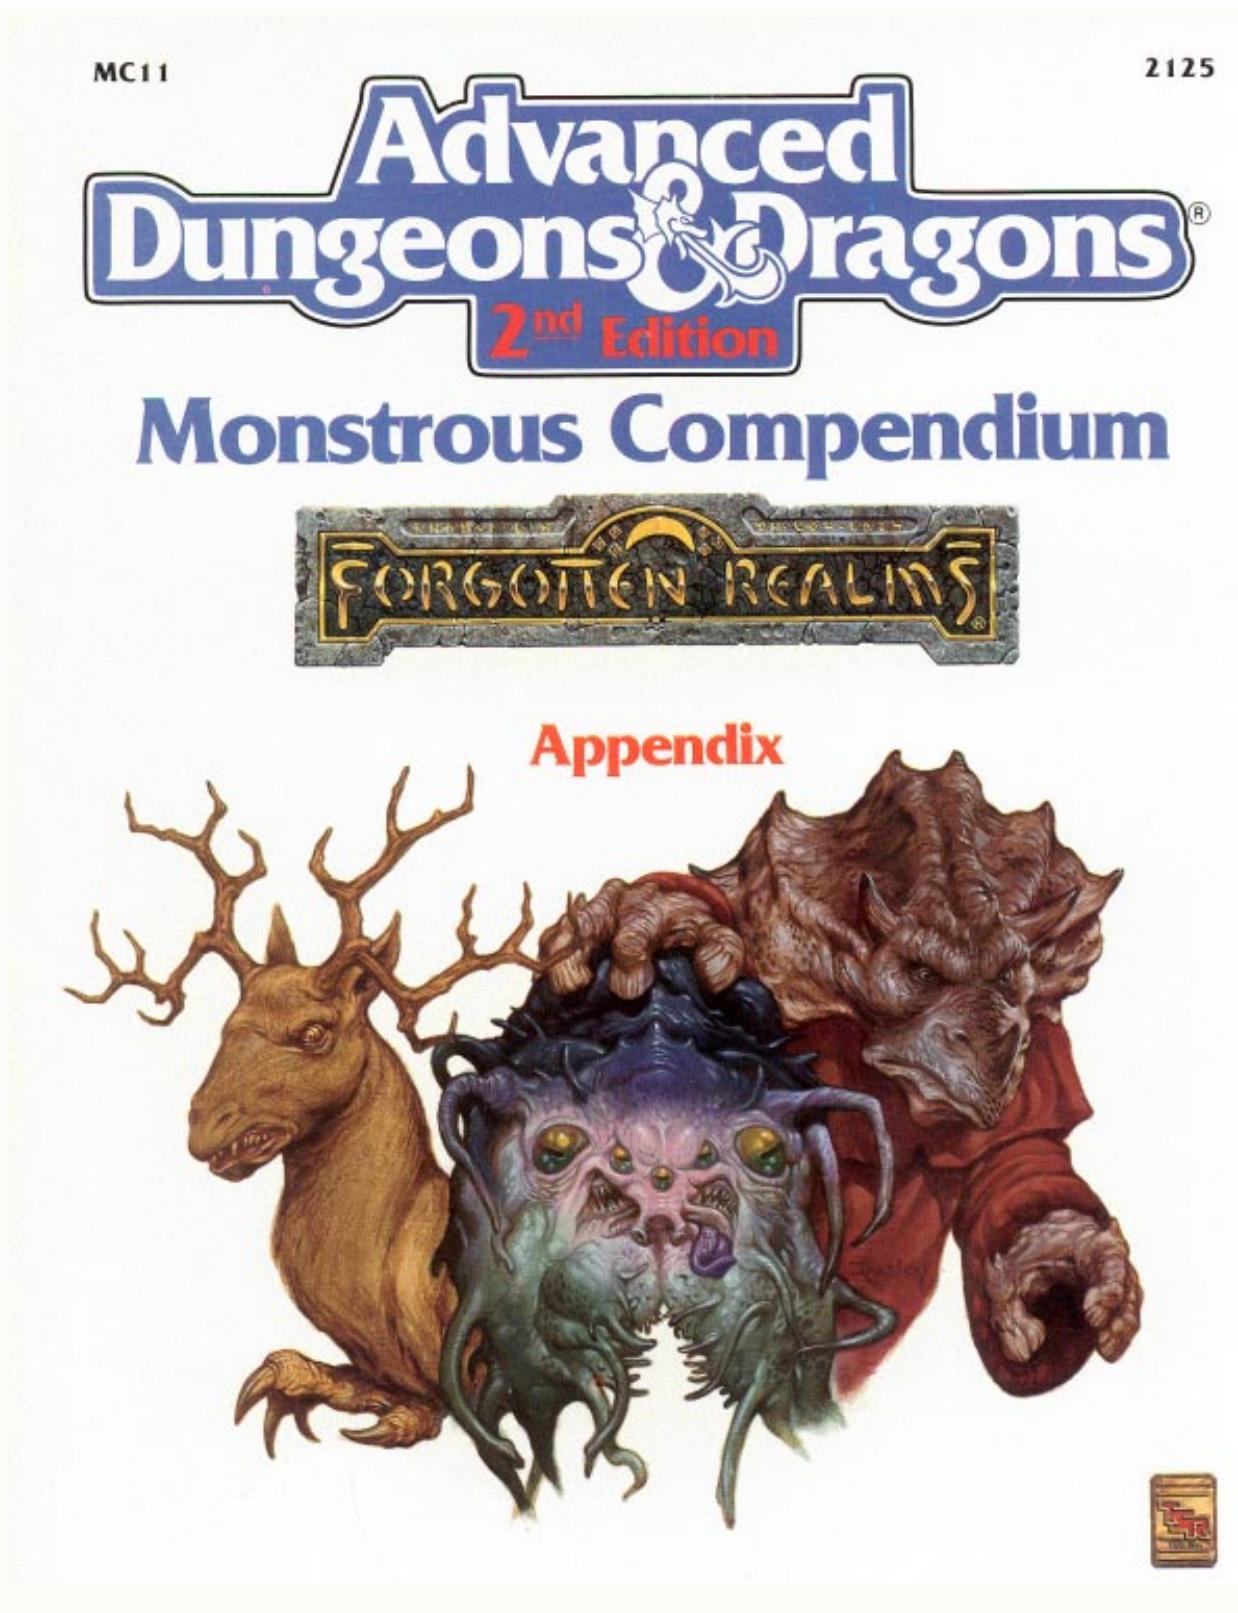 Forgotten Realms Appendix II (1992)